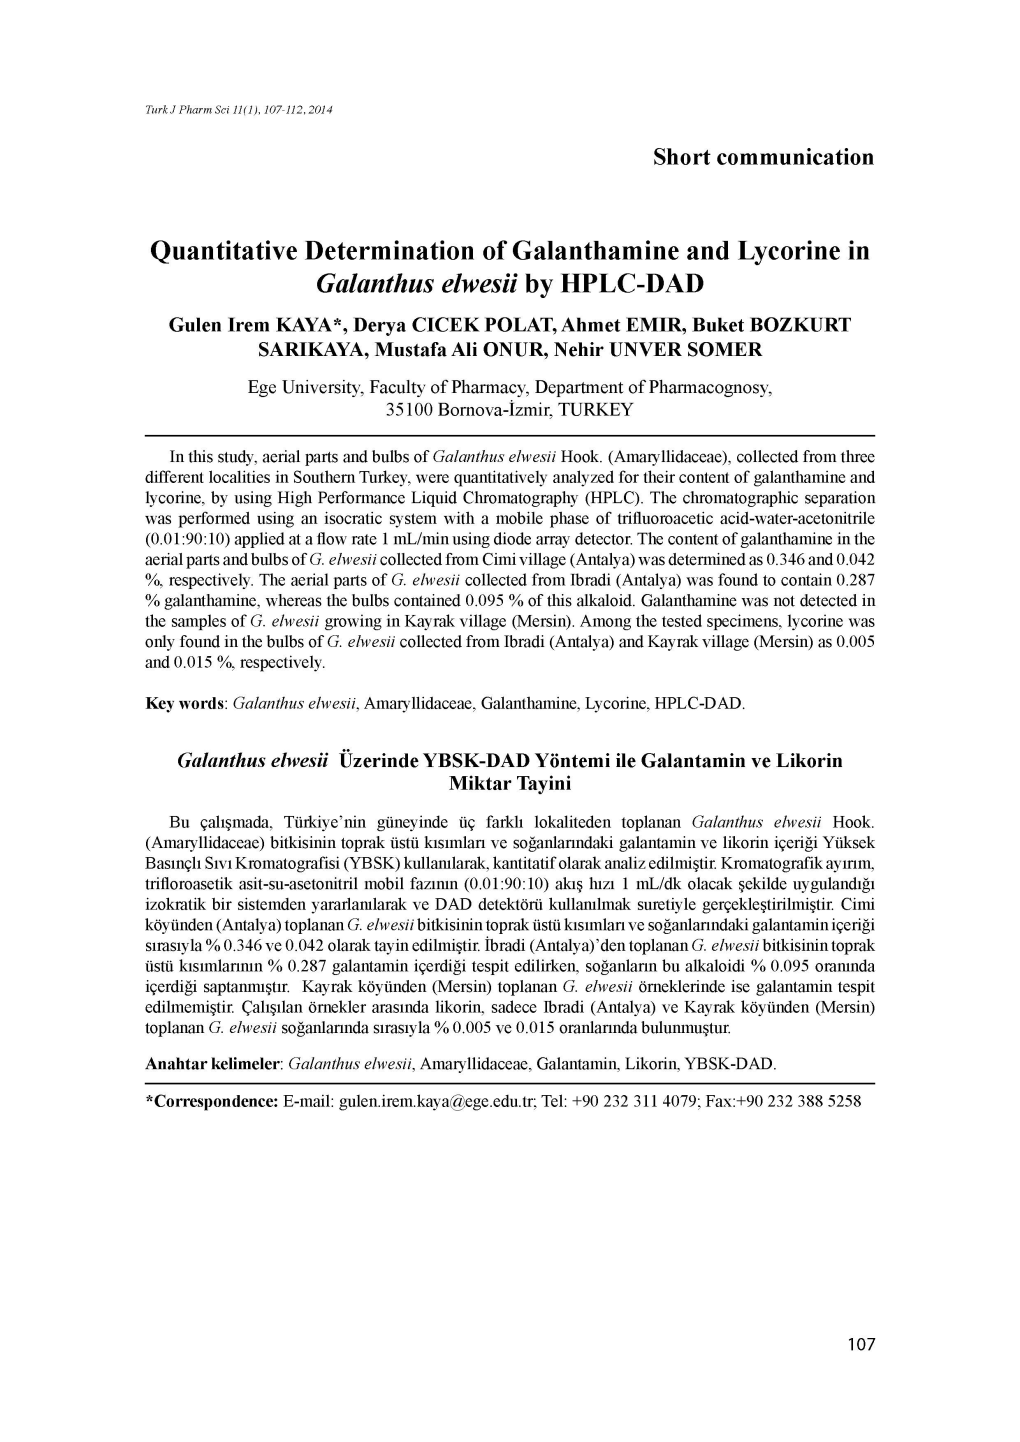 Quantitative Determination of Galanthamine and Lycorine in Galanthus Elwesii by HPLC-DAD